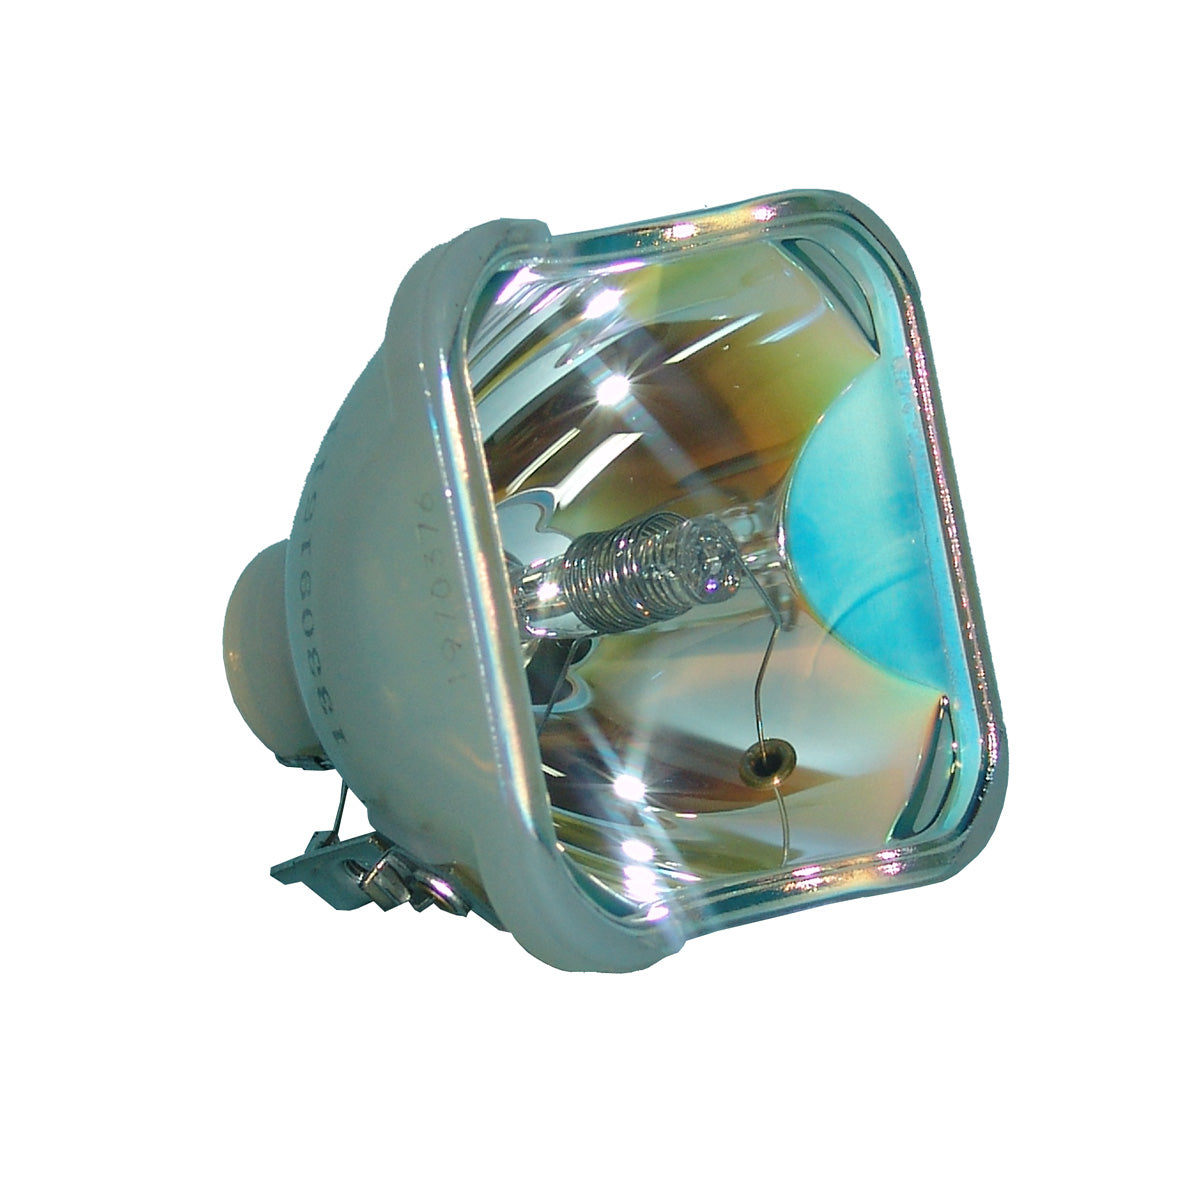 Viewsonic RLC-007 Osram Projector Bare Lamp